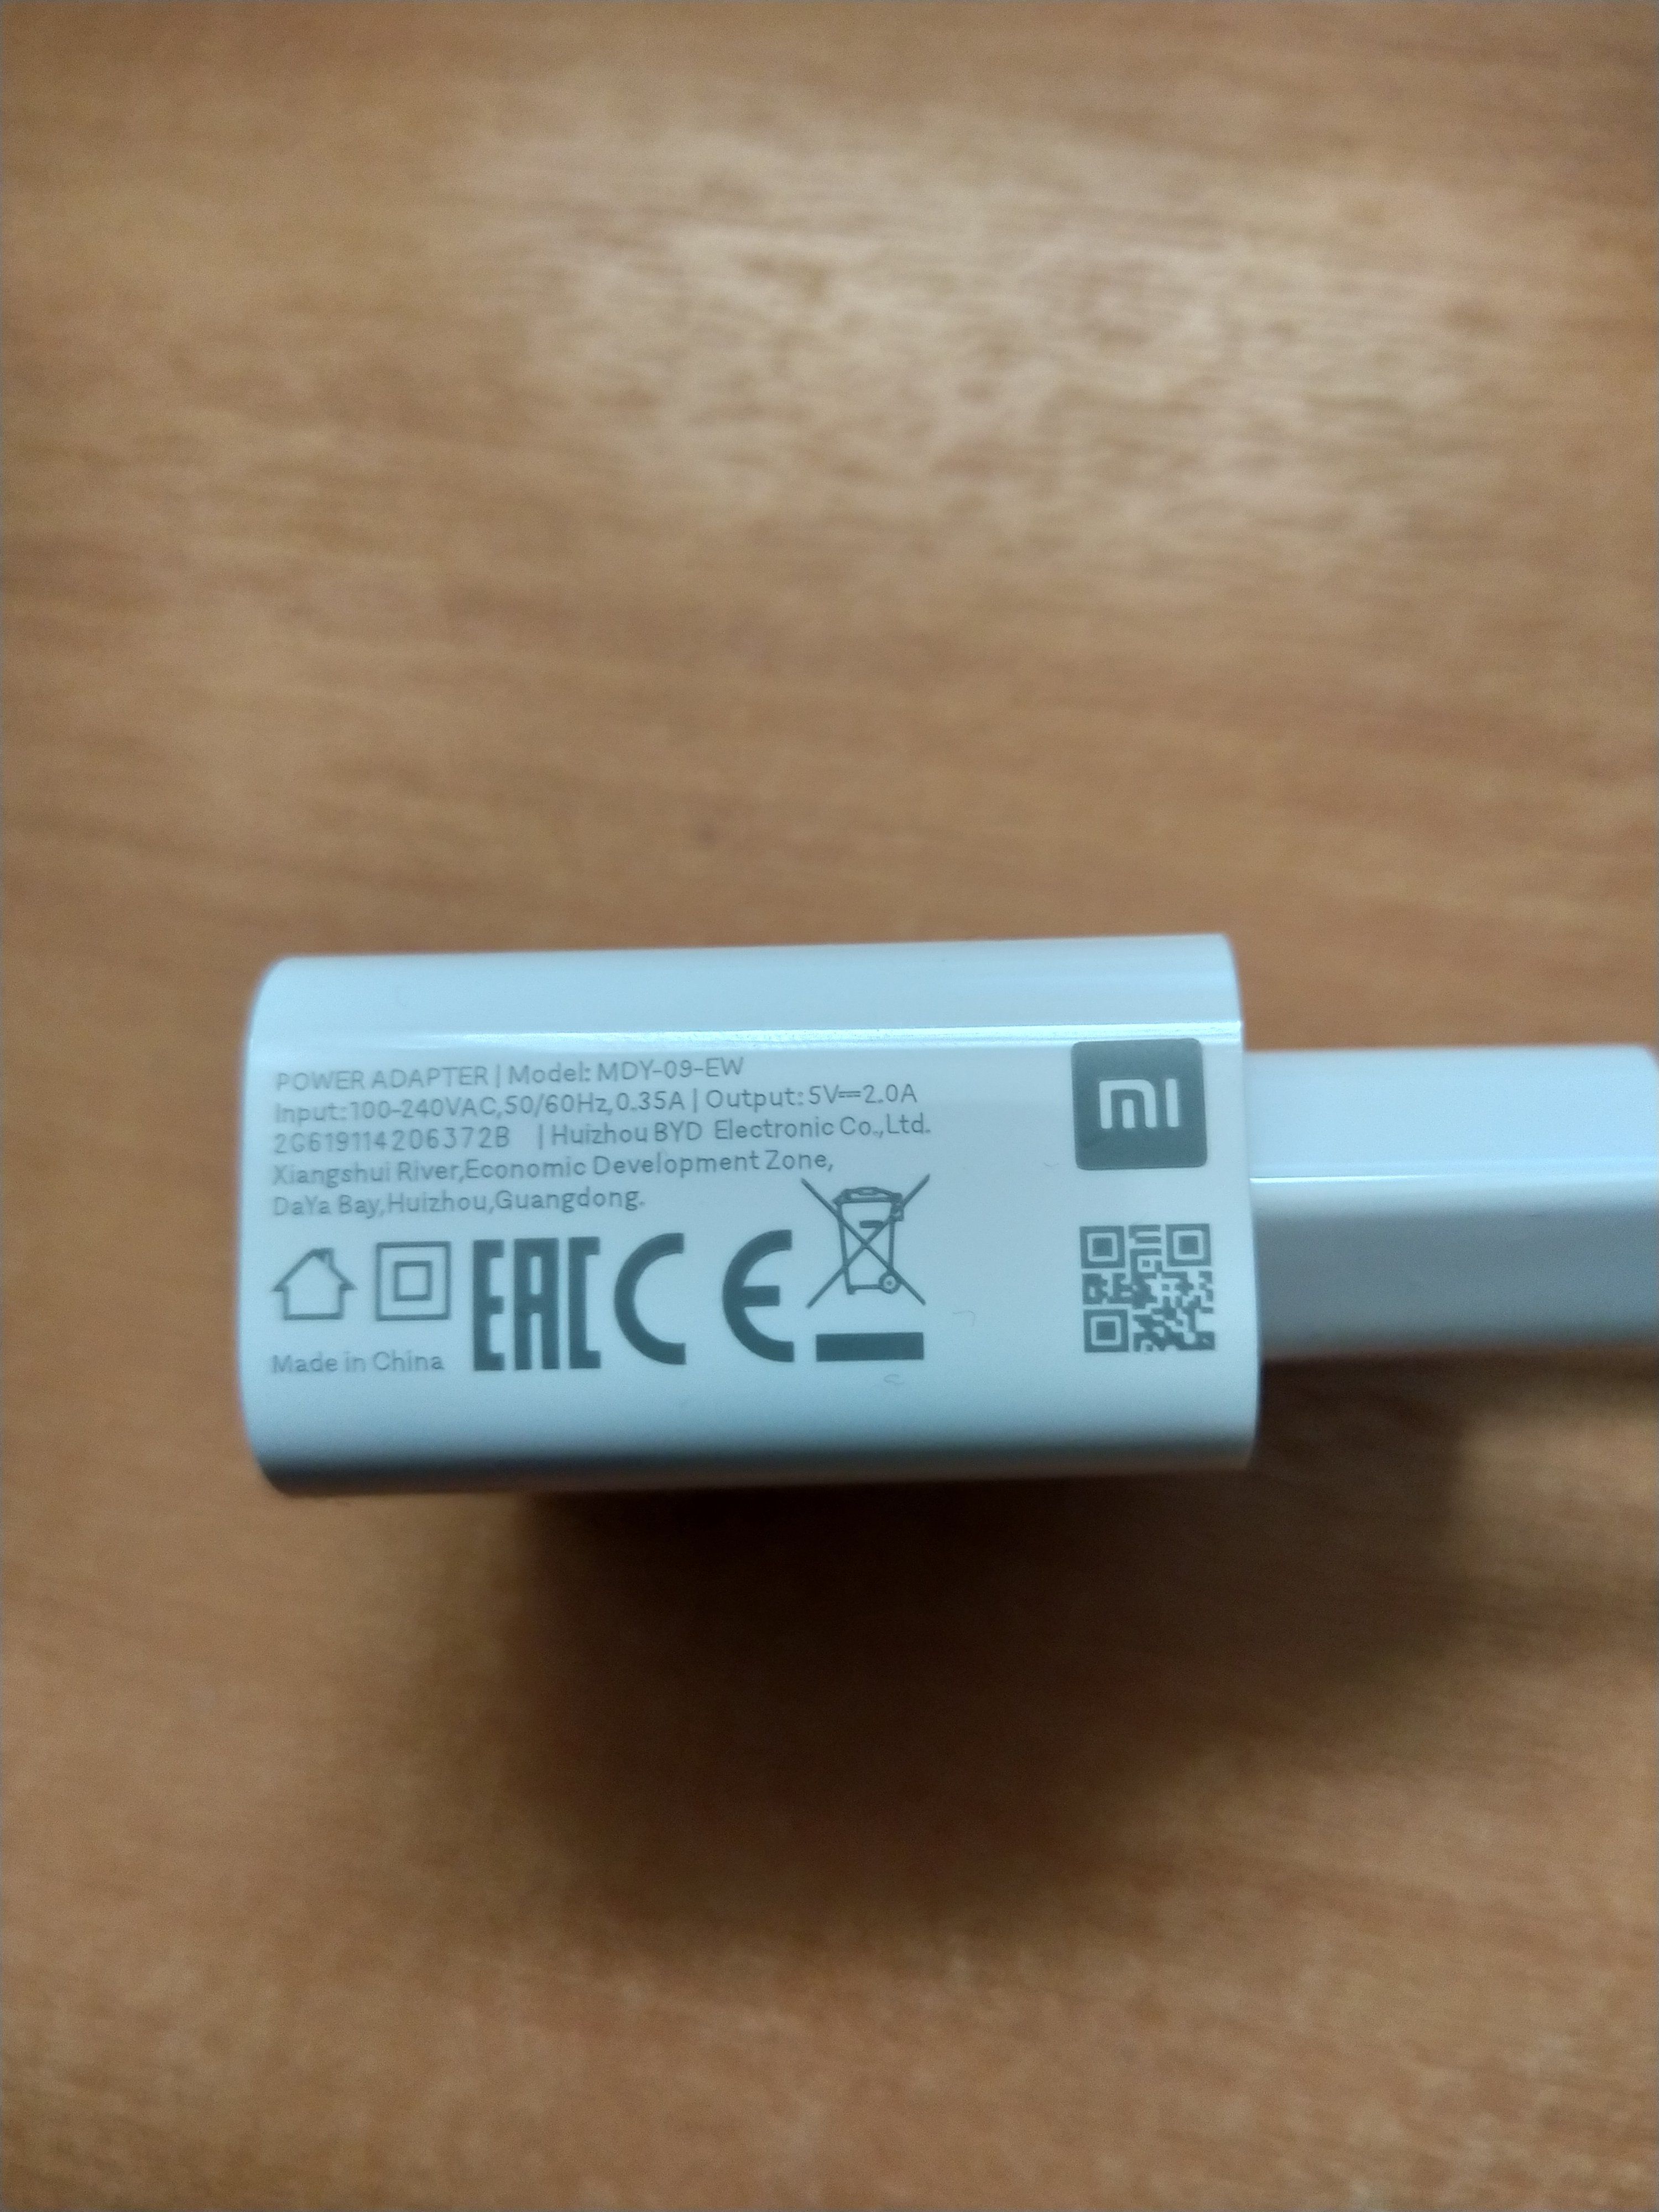 Xiaomi Redmi Note 8 cihaz için fast charging özellikli sarj aleti önerisi |  Technopat Sosyal